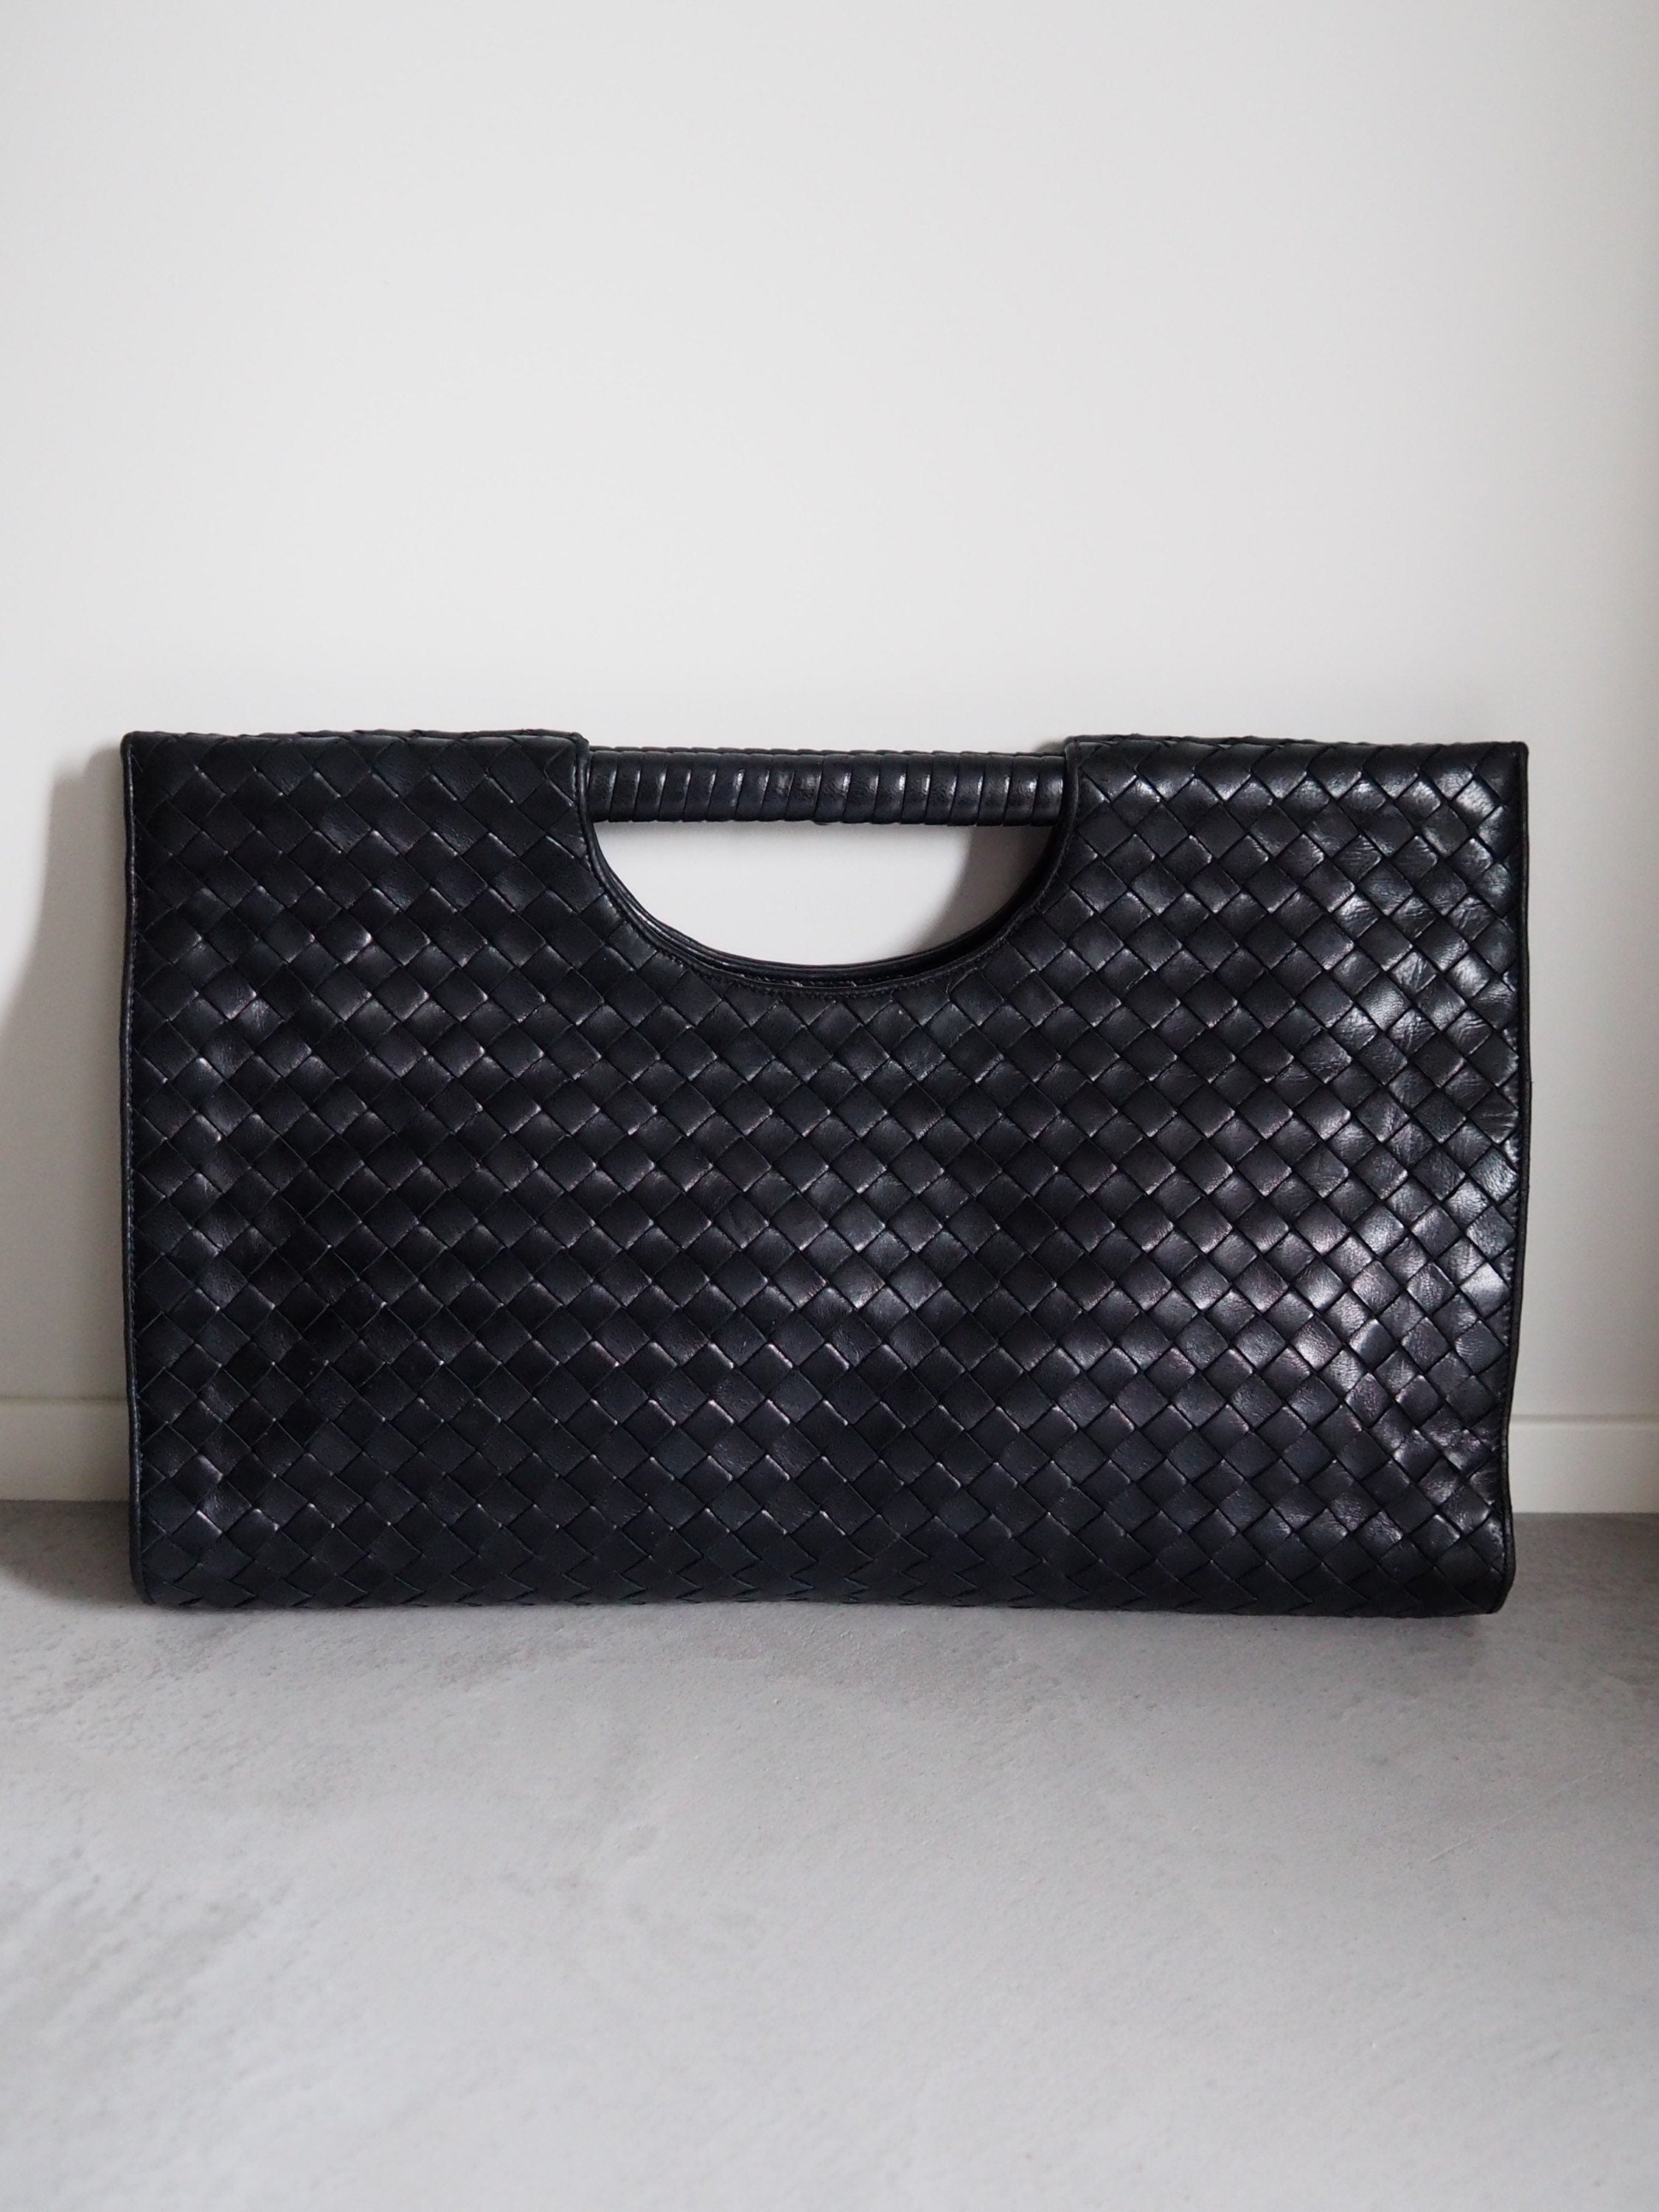 BOTTEGA VENETA Intrecciato Leather Handbag Clutch Black Leather Vintage Authentic